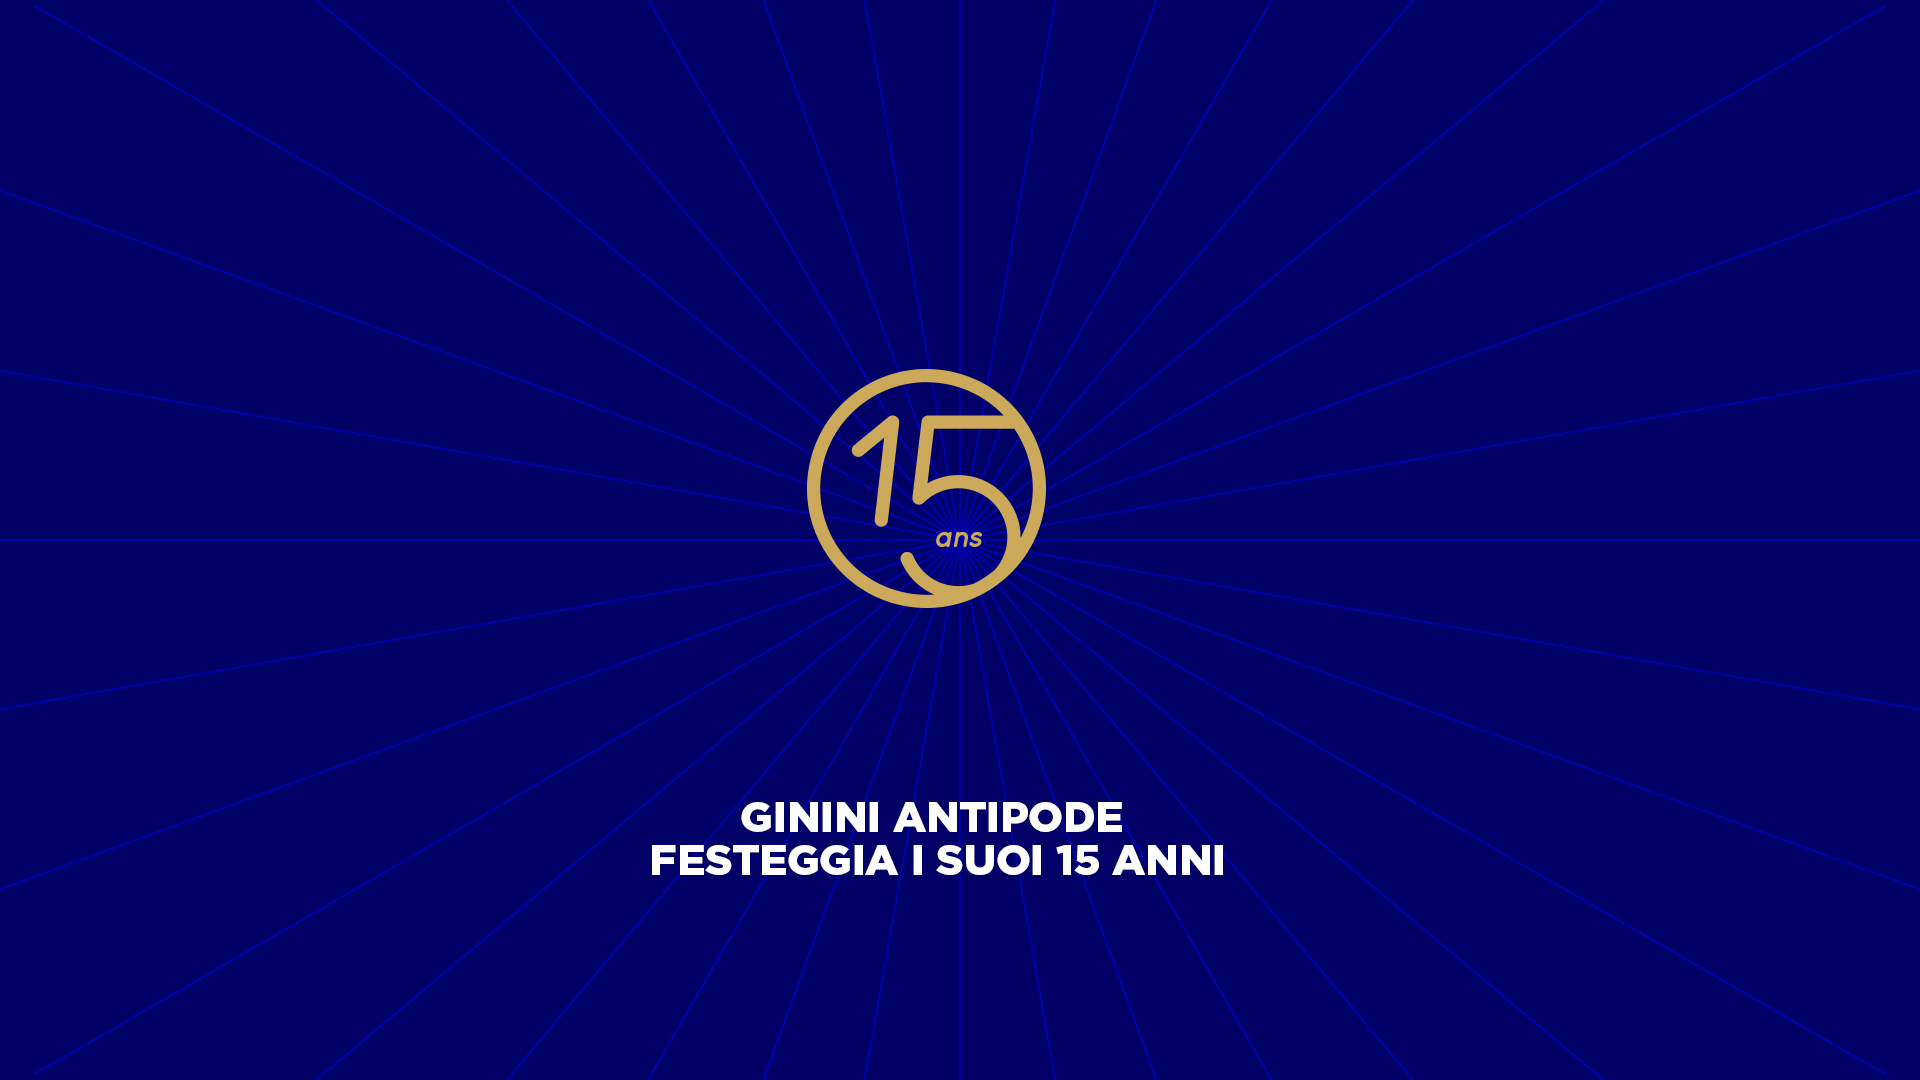  Logo  15 ans BG  IT 3 Ginini antipode